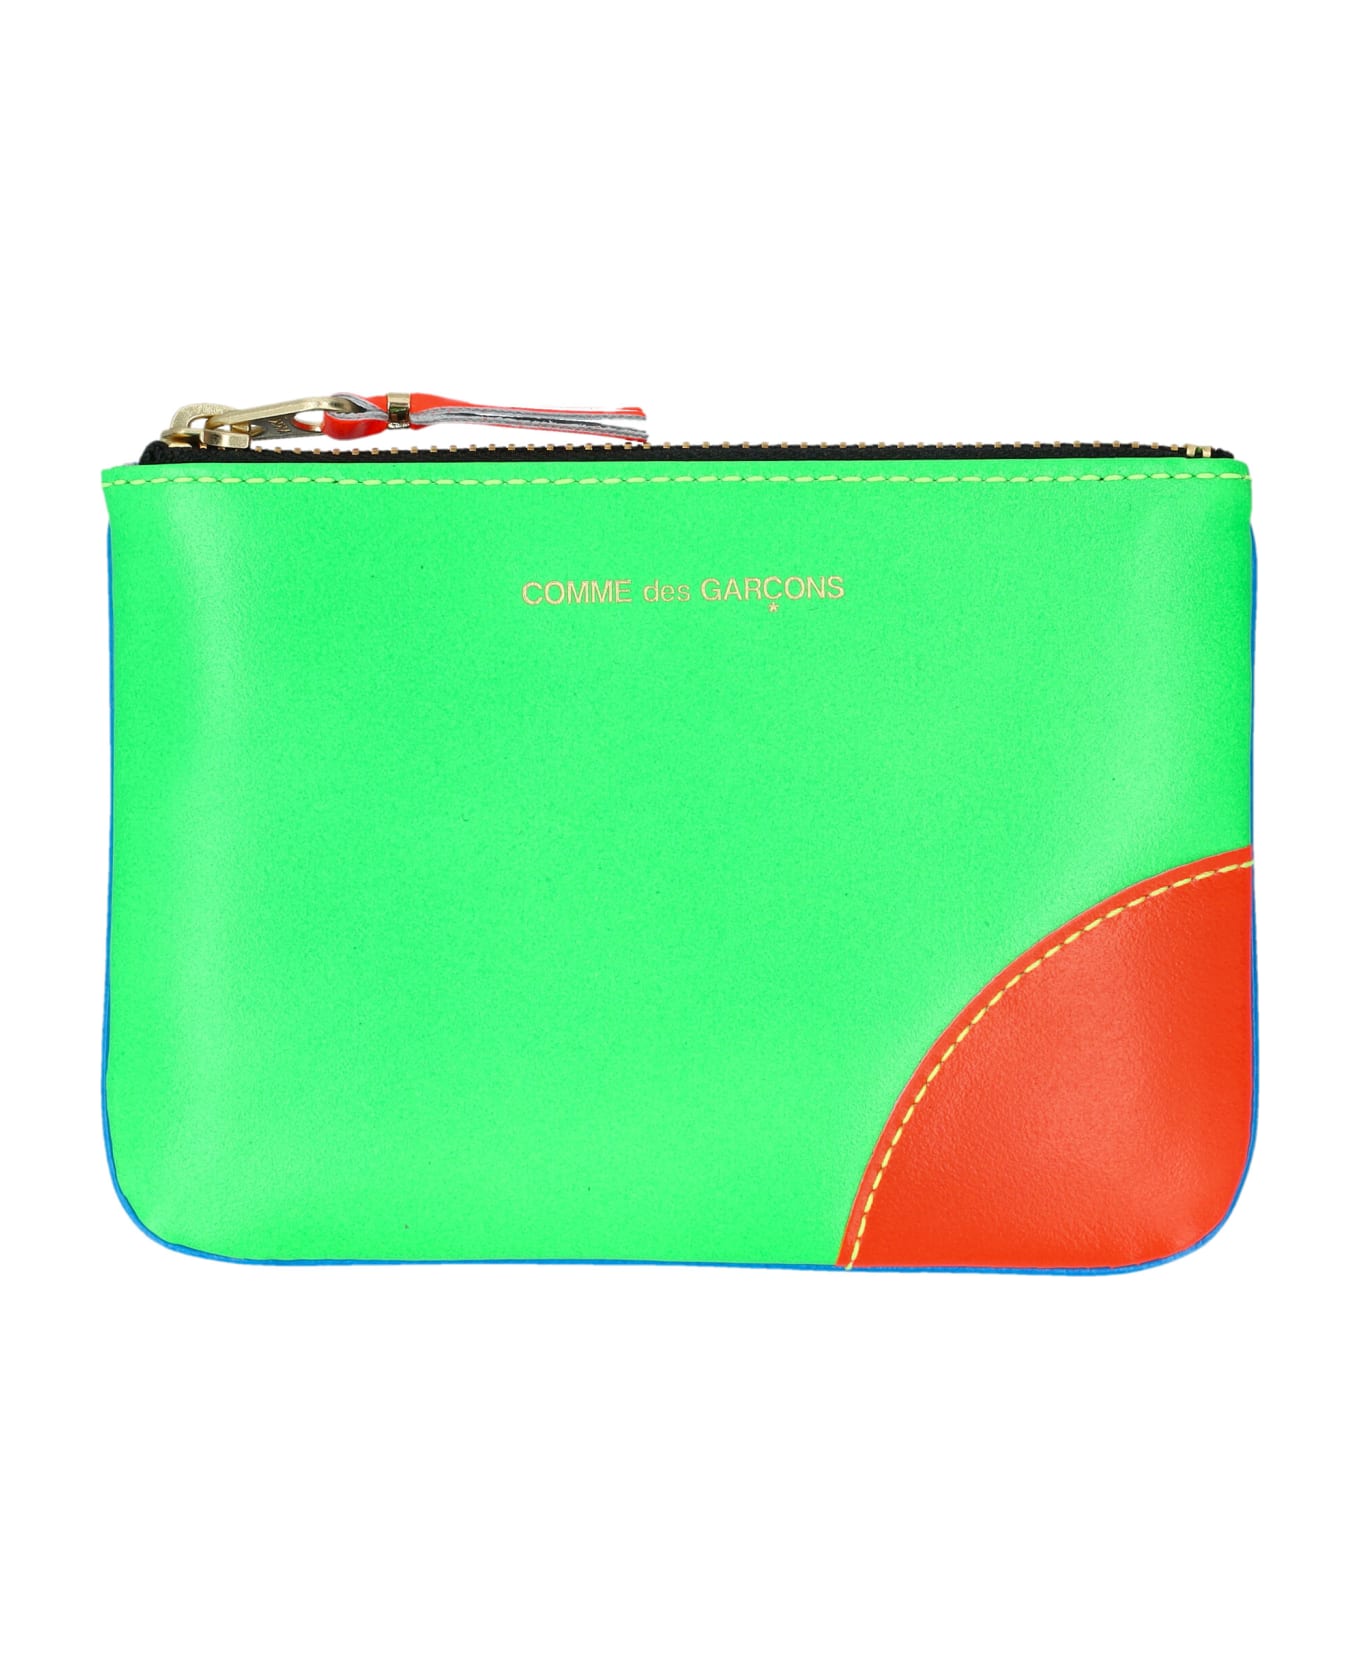 Comme des Garçons Wallet Super Fluo Wallet - GREEN/BLUE 財布